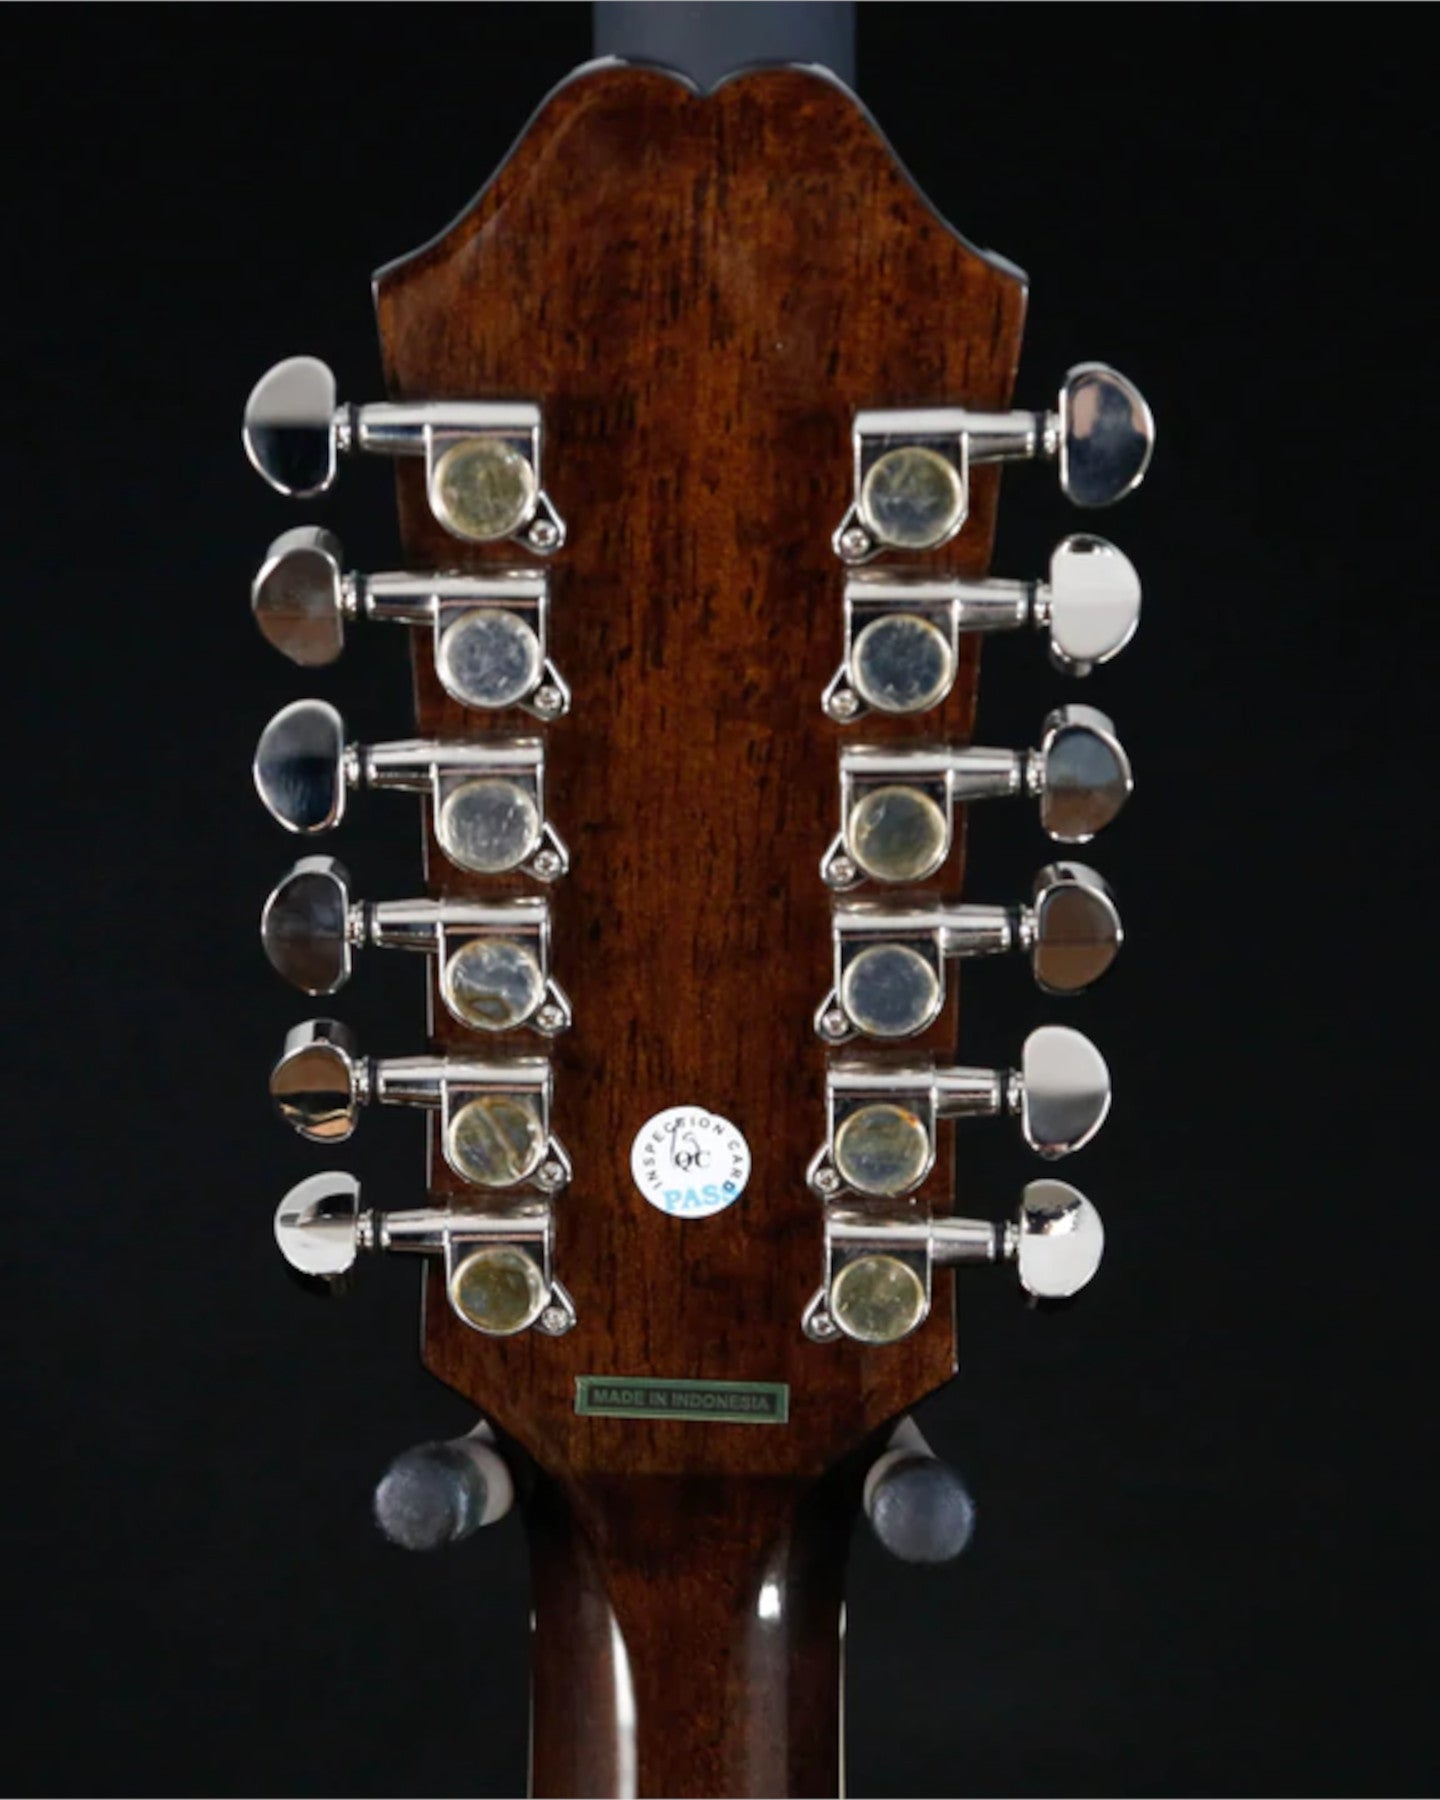 EA2TNACH1 DR-212 Acoustic Guitar w/ Chrome HW, Natural